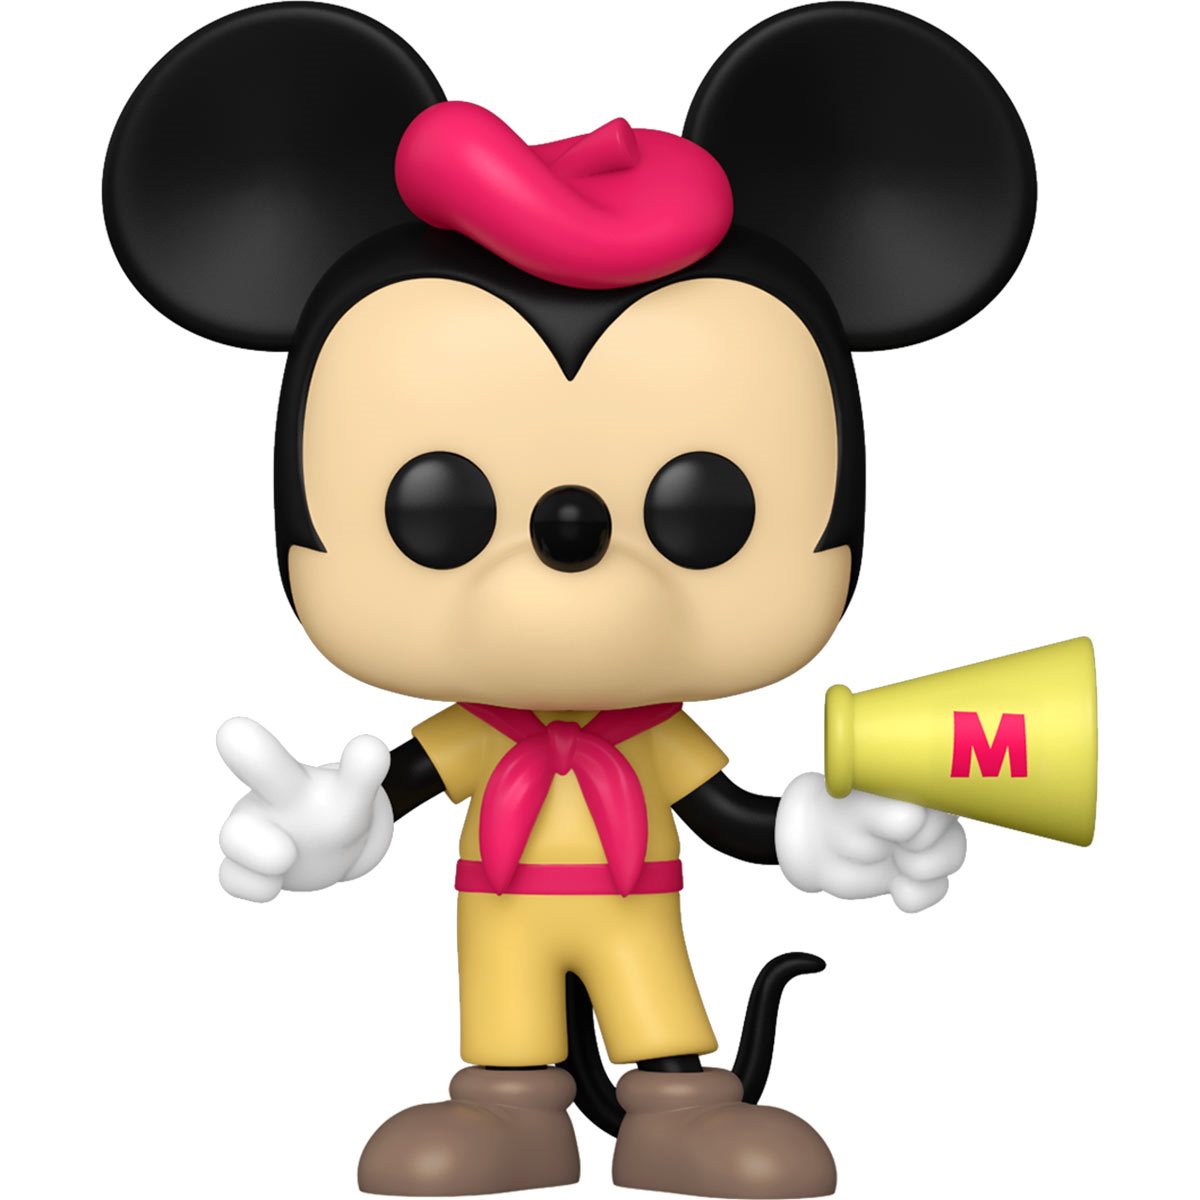 Funko Pop! - Disney 100: Mickey Mouse Club